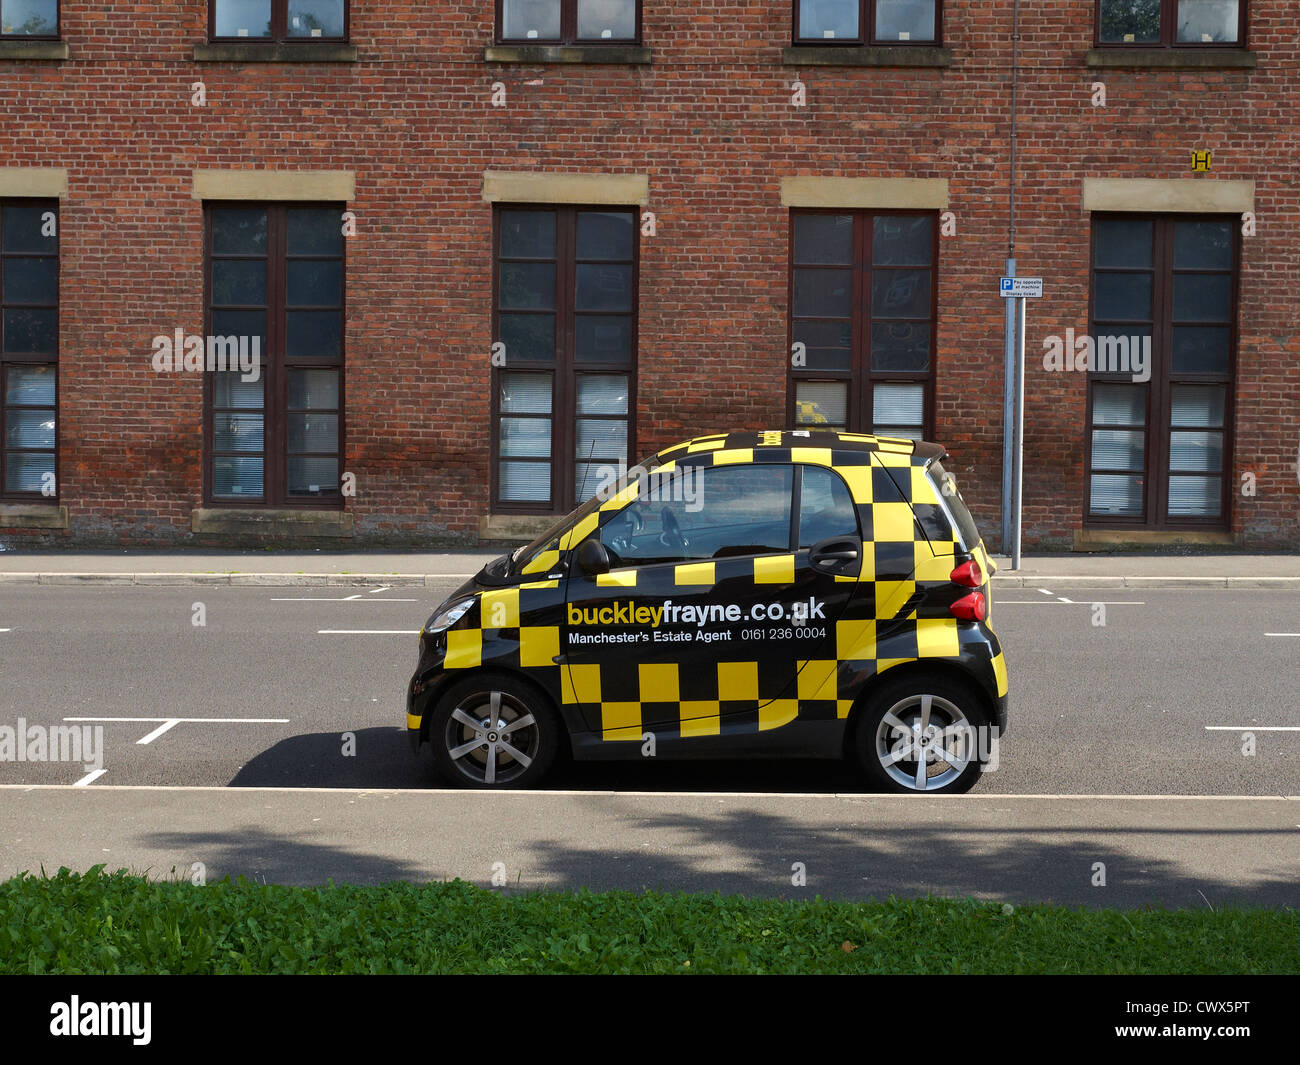 BuckleyFrayne Estate agent advertising on Smart car in Manchester UK Stock Photo